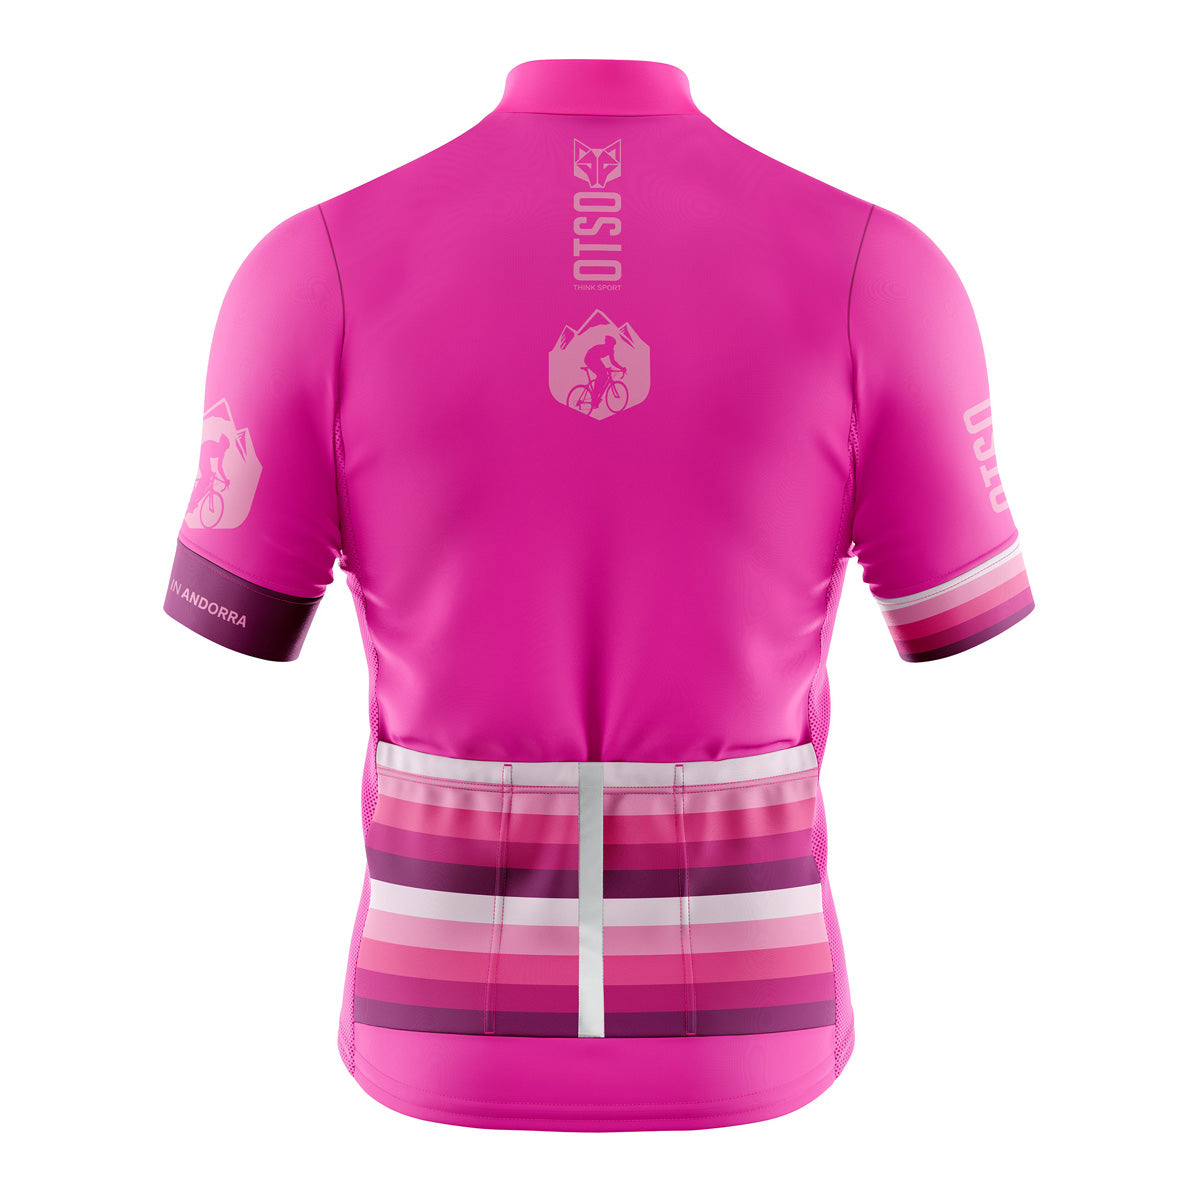 Maillot de cyclisme manches courtes homme - Stripes Fluo Pink (Outlet)